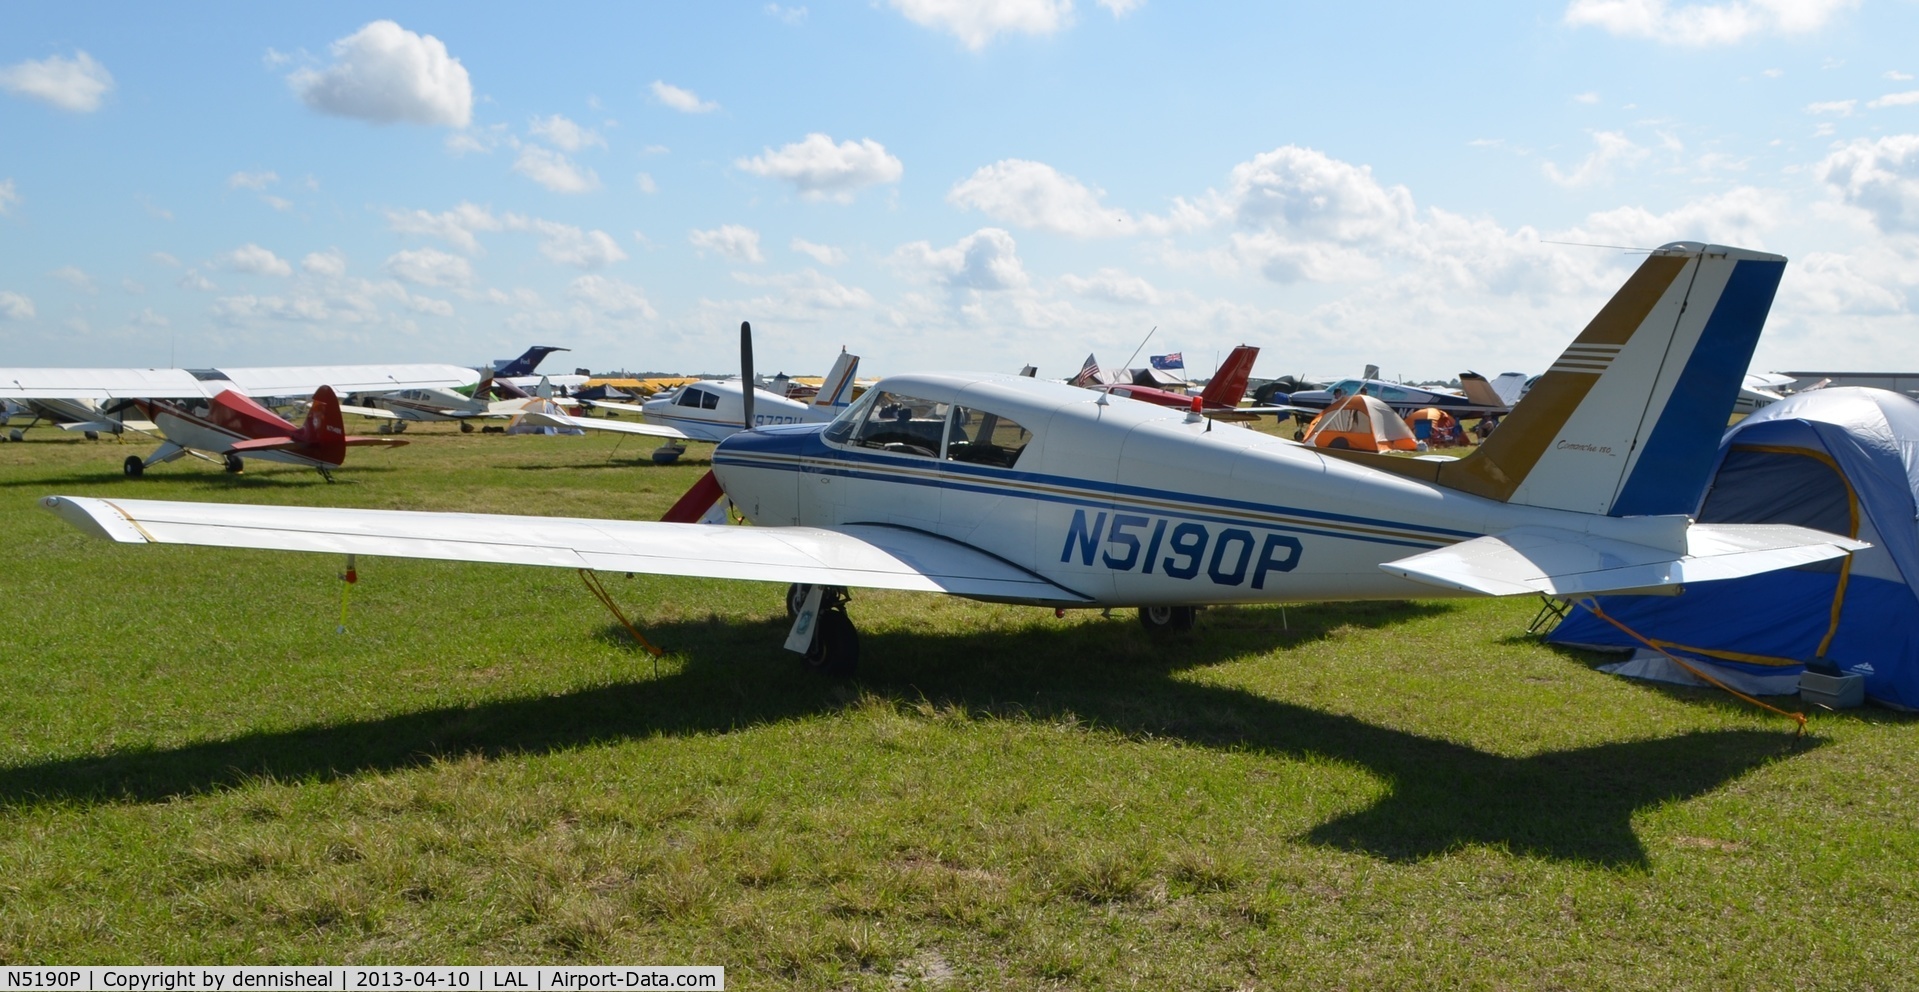 N5190P, 1958 Piper PA-24 C/N 24-186, 1958 PIPER PA-24 AT SUN N FUN